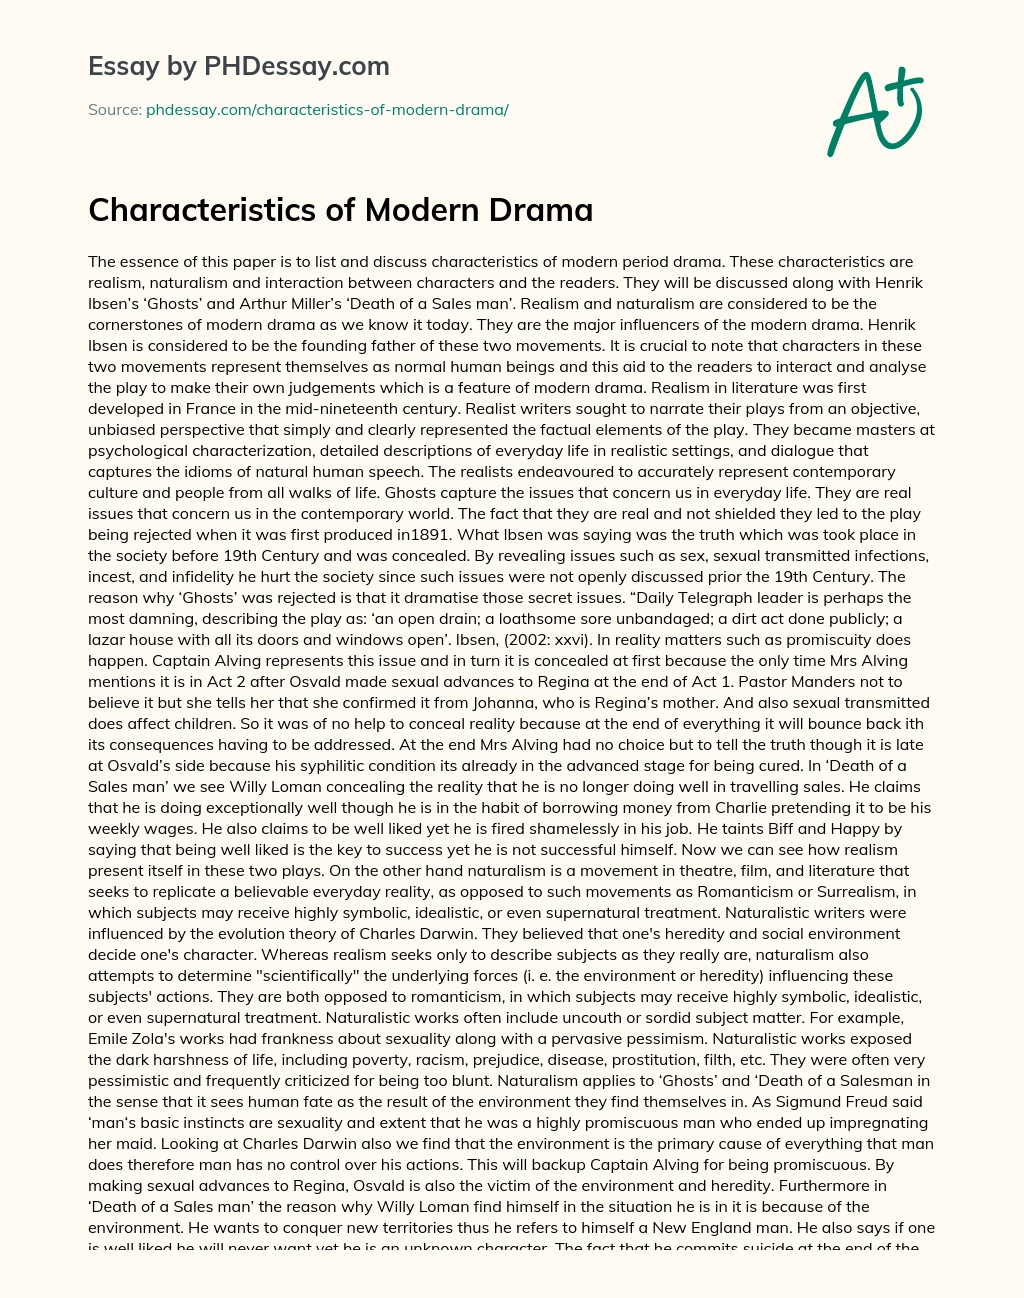 Characteristics of Modern Drama essay